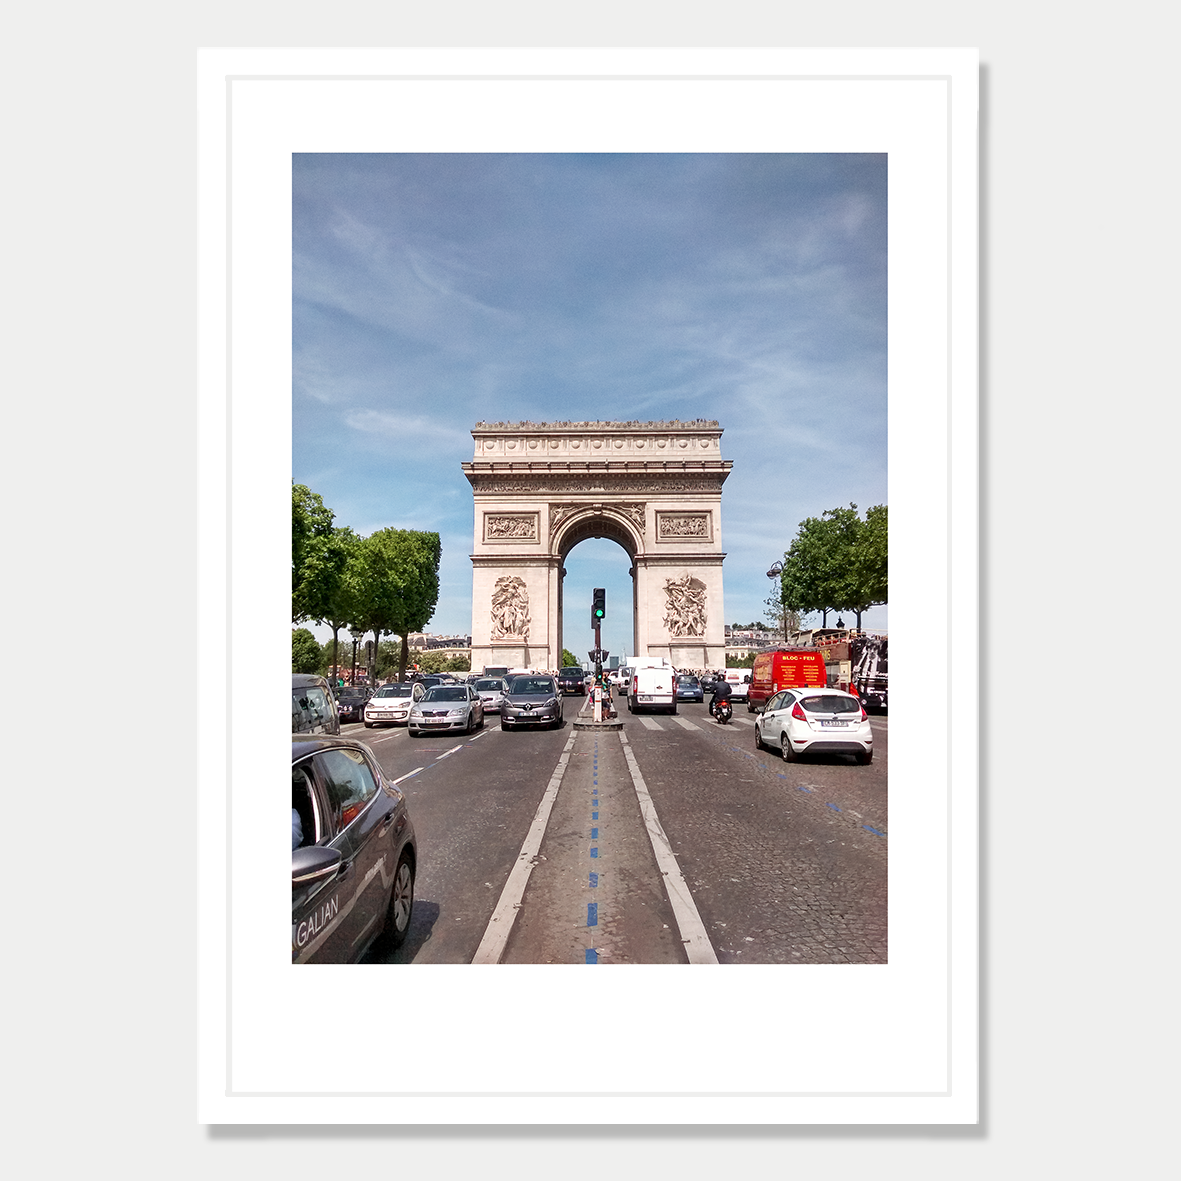 Green Light Arch De Triomphe Paris Still Life Photographic Art Print in a Skinny White Frame